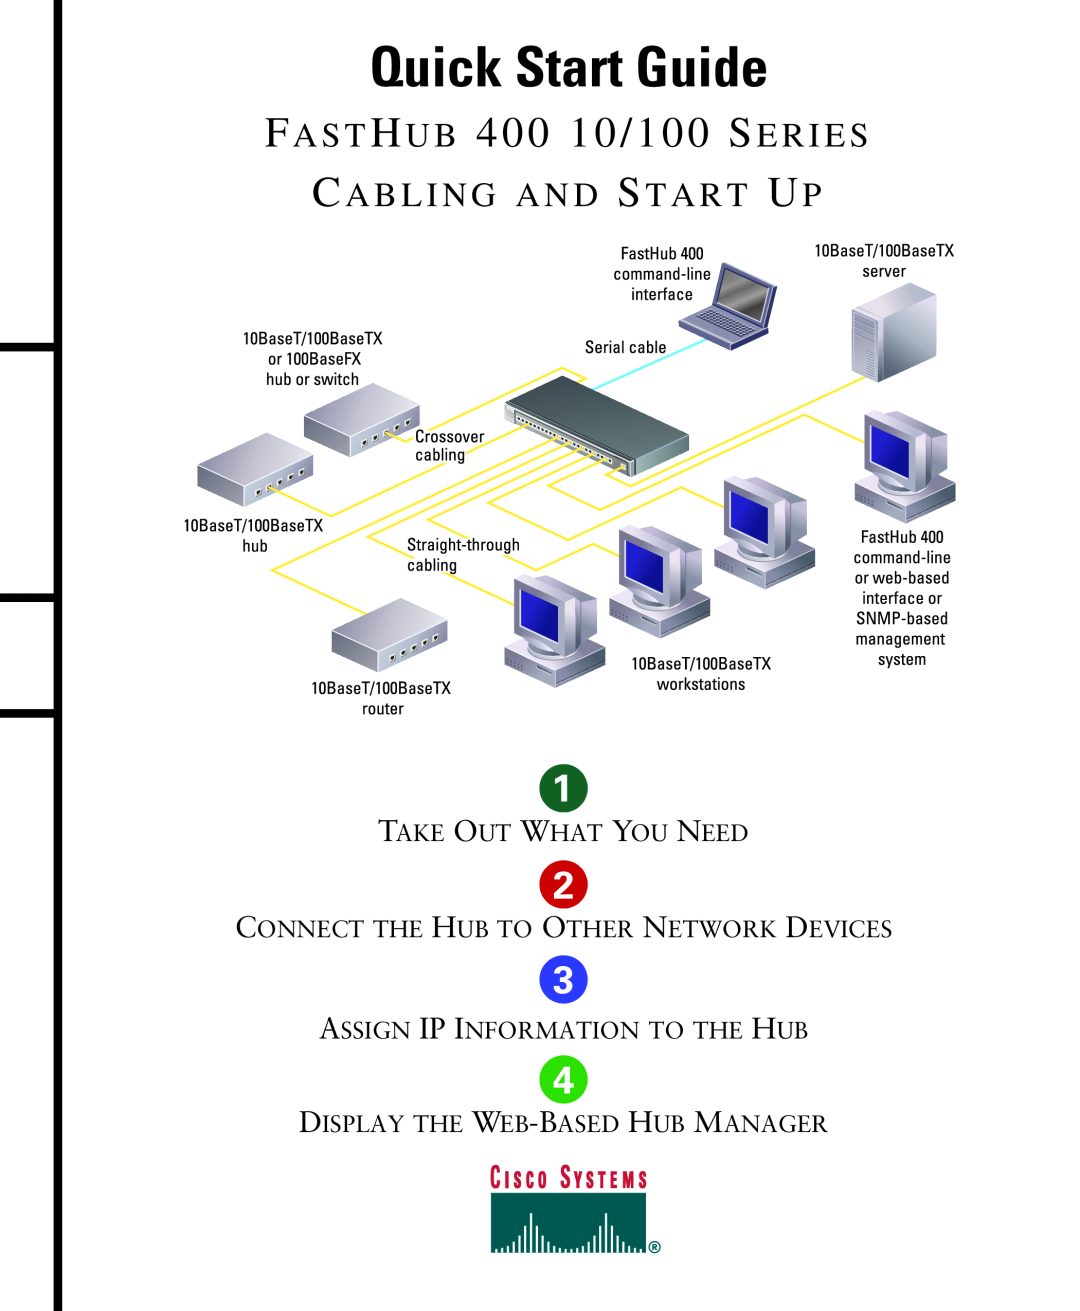 Cisco Systems quick start Quick Start Guide, FA S T HU B 400 10/100 SE R I E S CA B L I N G A N D ST A R T UP 